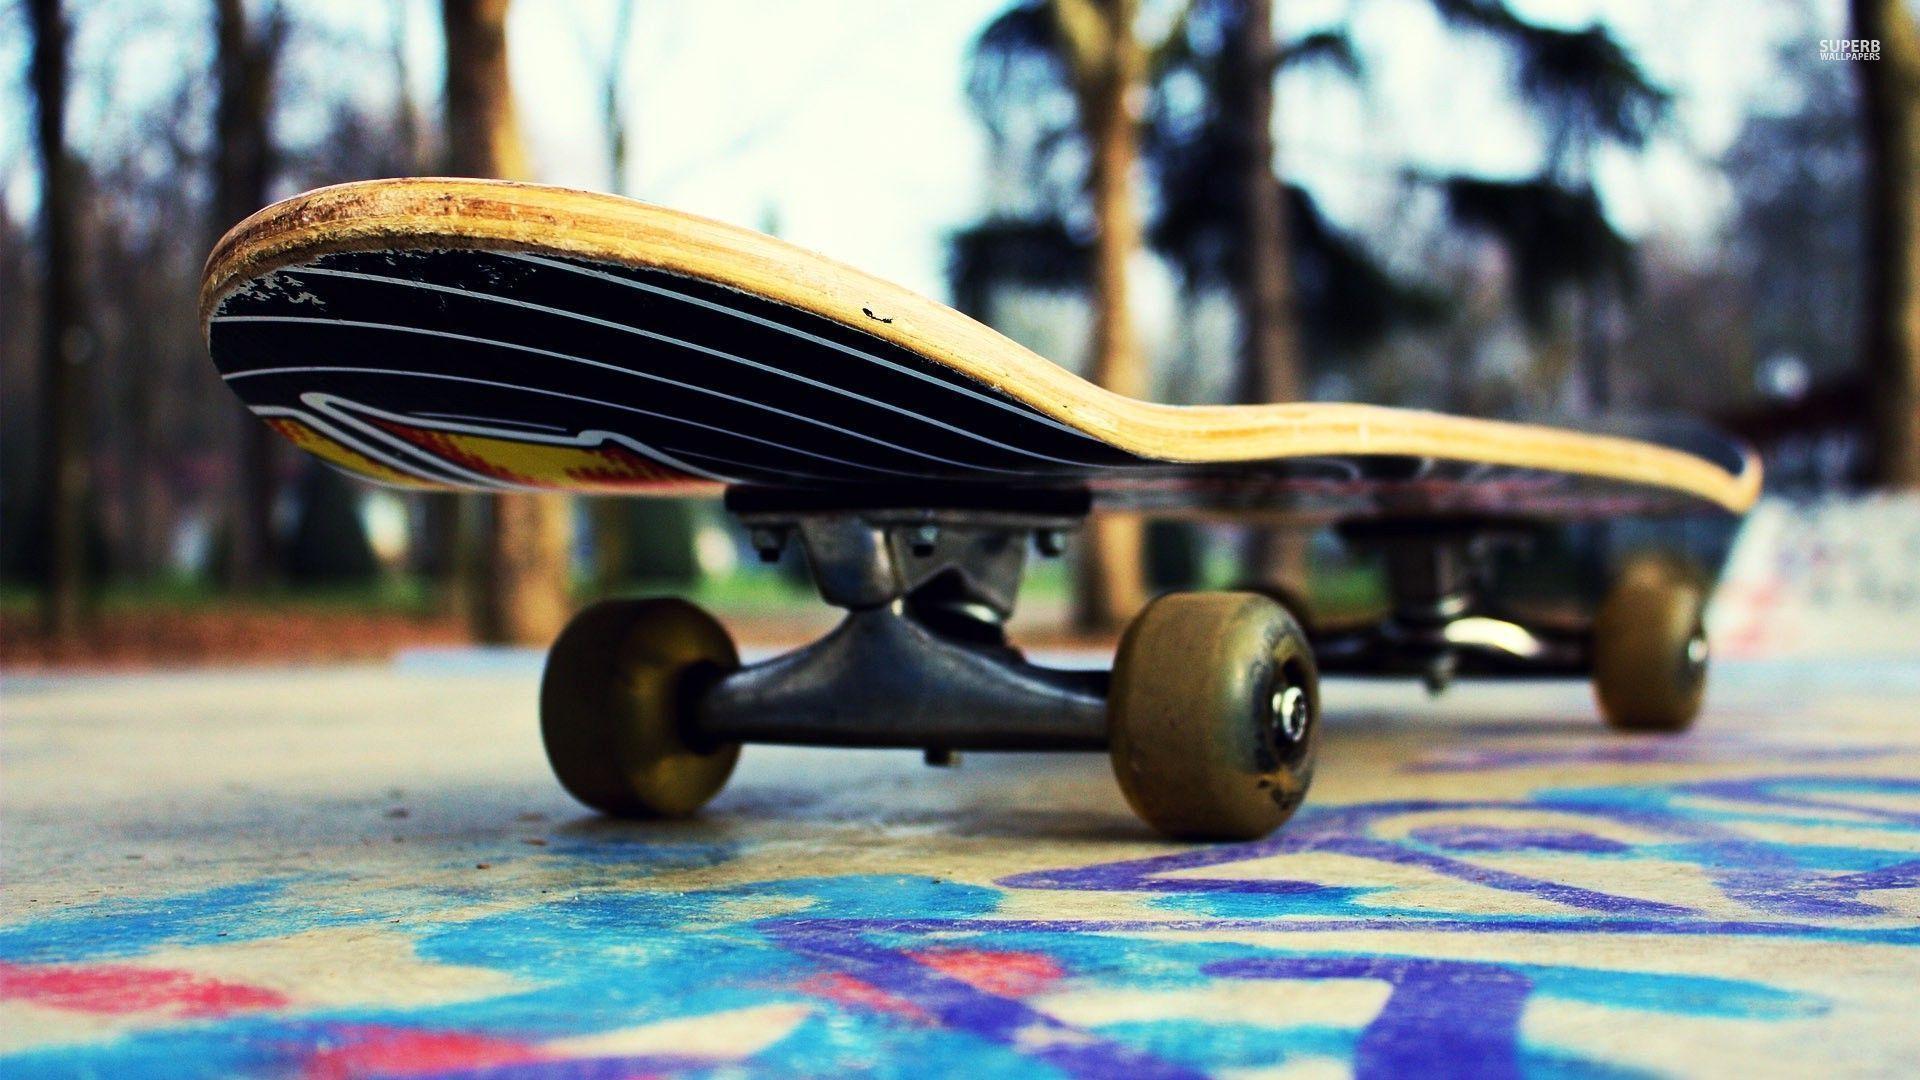 Skateboard 29638